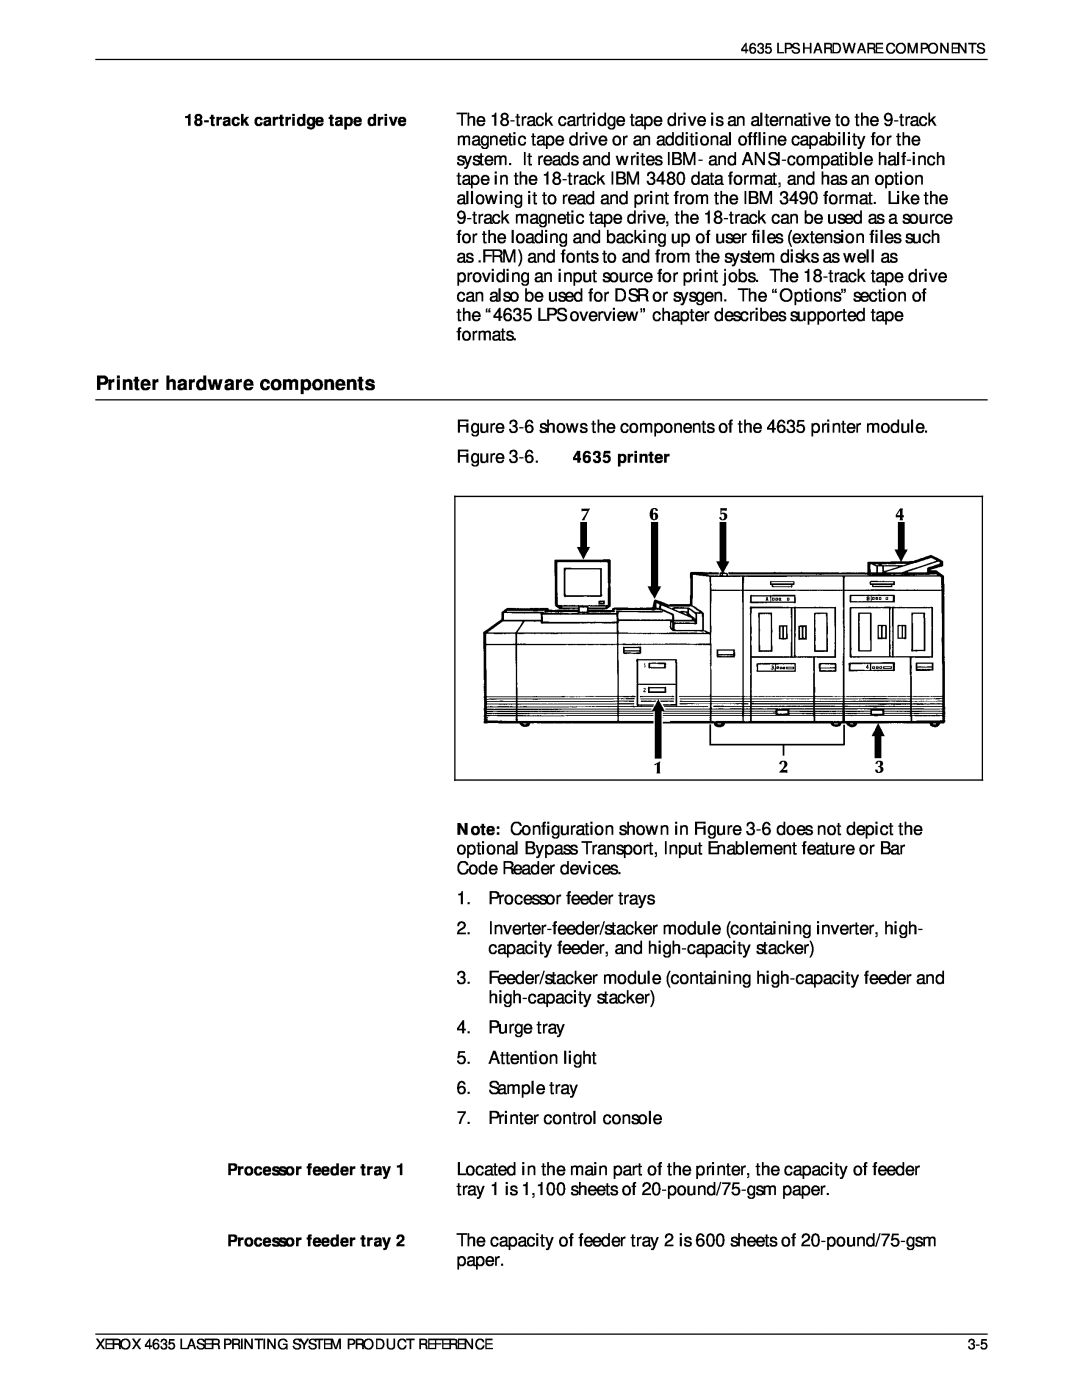 Xerox 721P83071 manual Printer hardware components, printer 